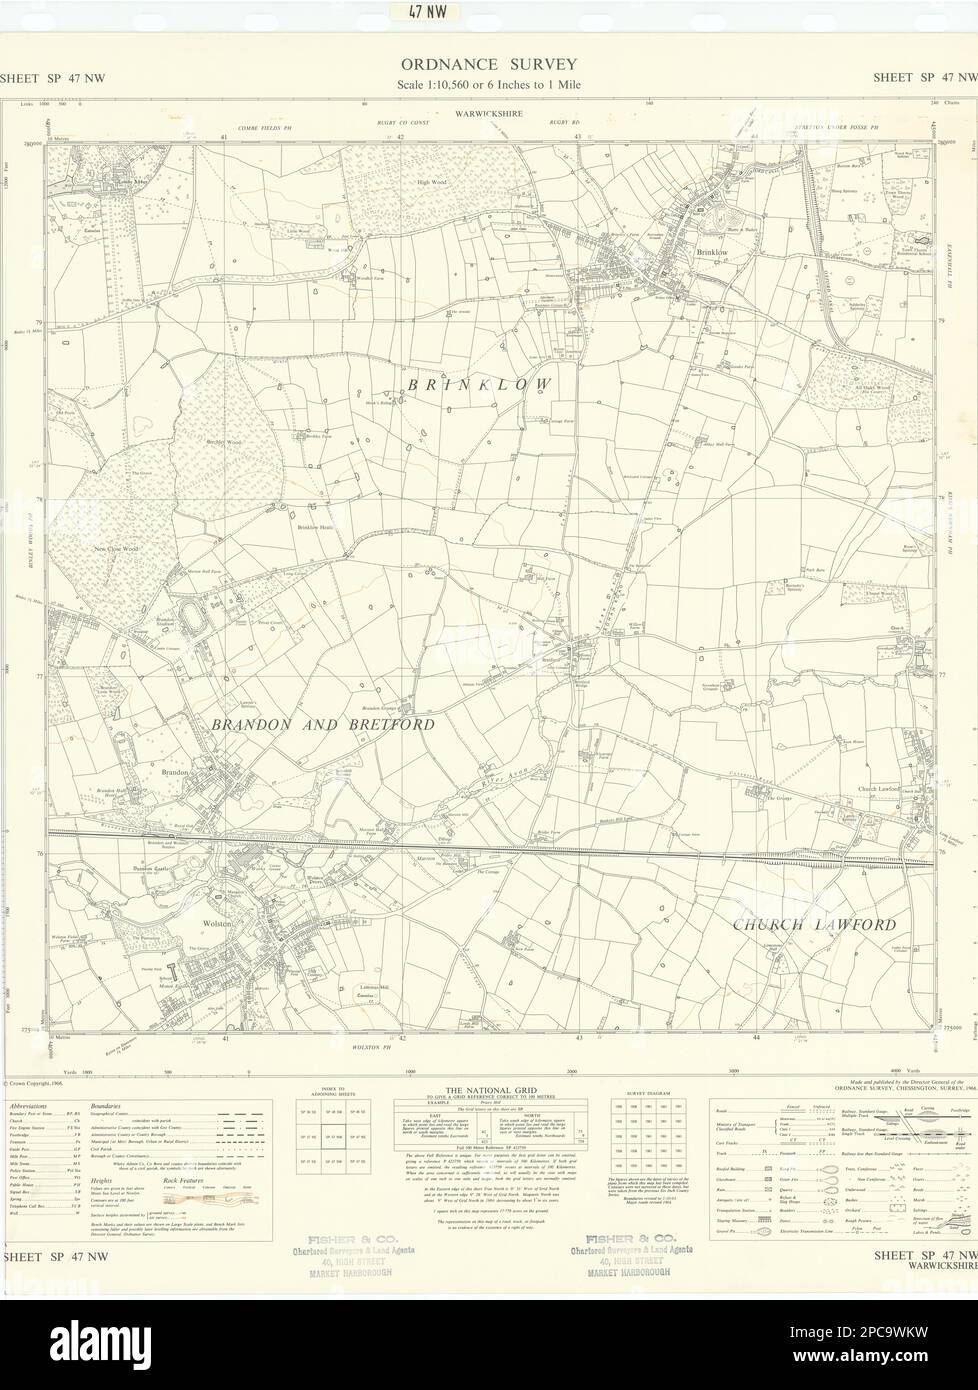 Ordnance Survey SP47NW Warks Wolston Brinklow Brandon Church Lawford 1966 map Stock Photo